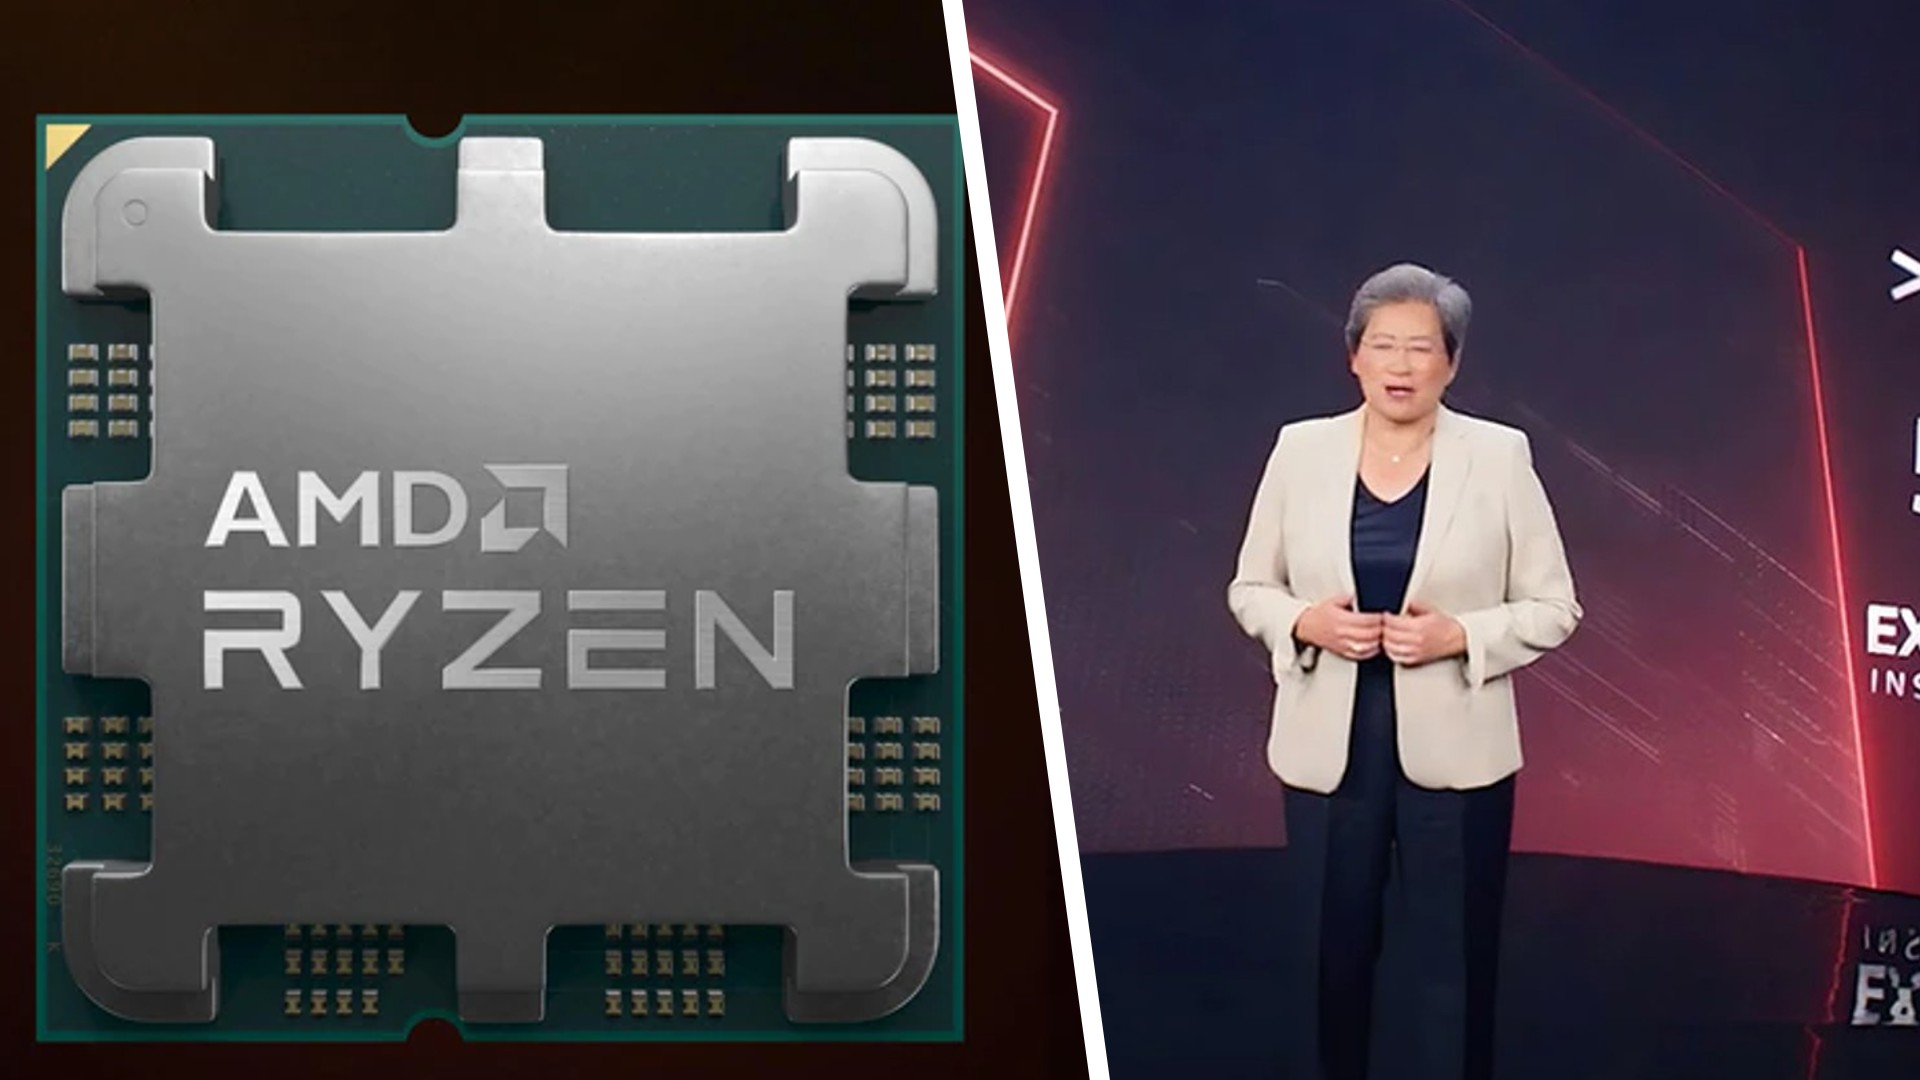 Presentacion AMD 7000 series